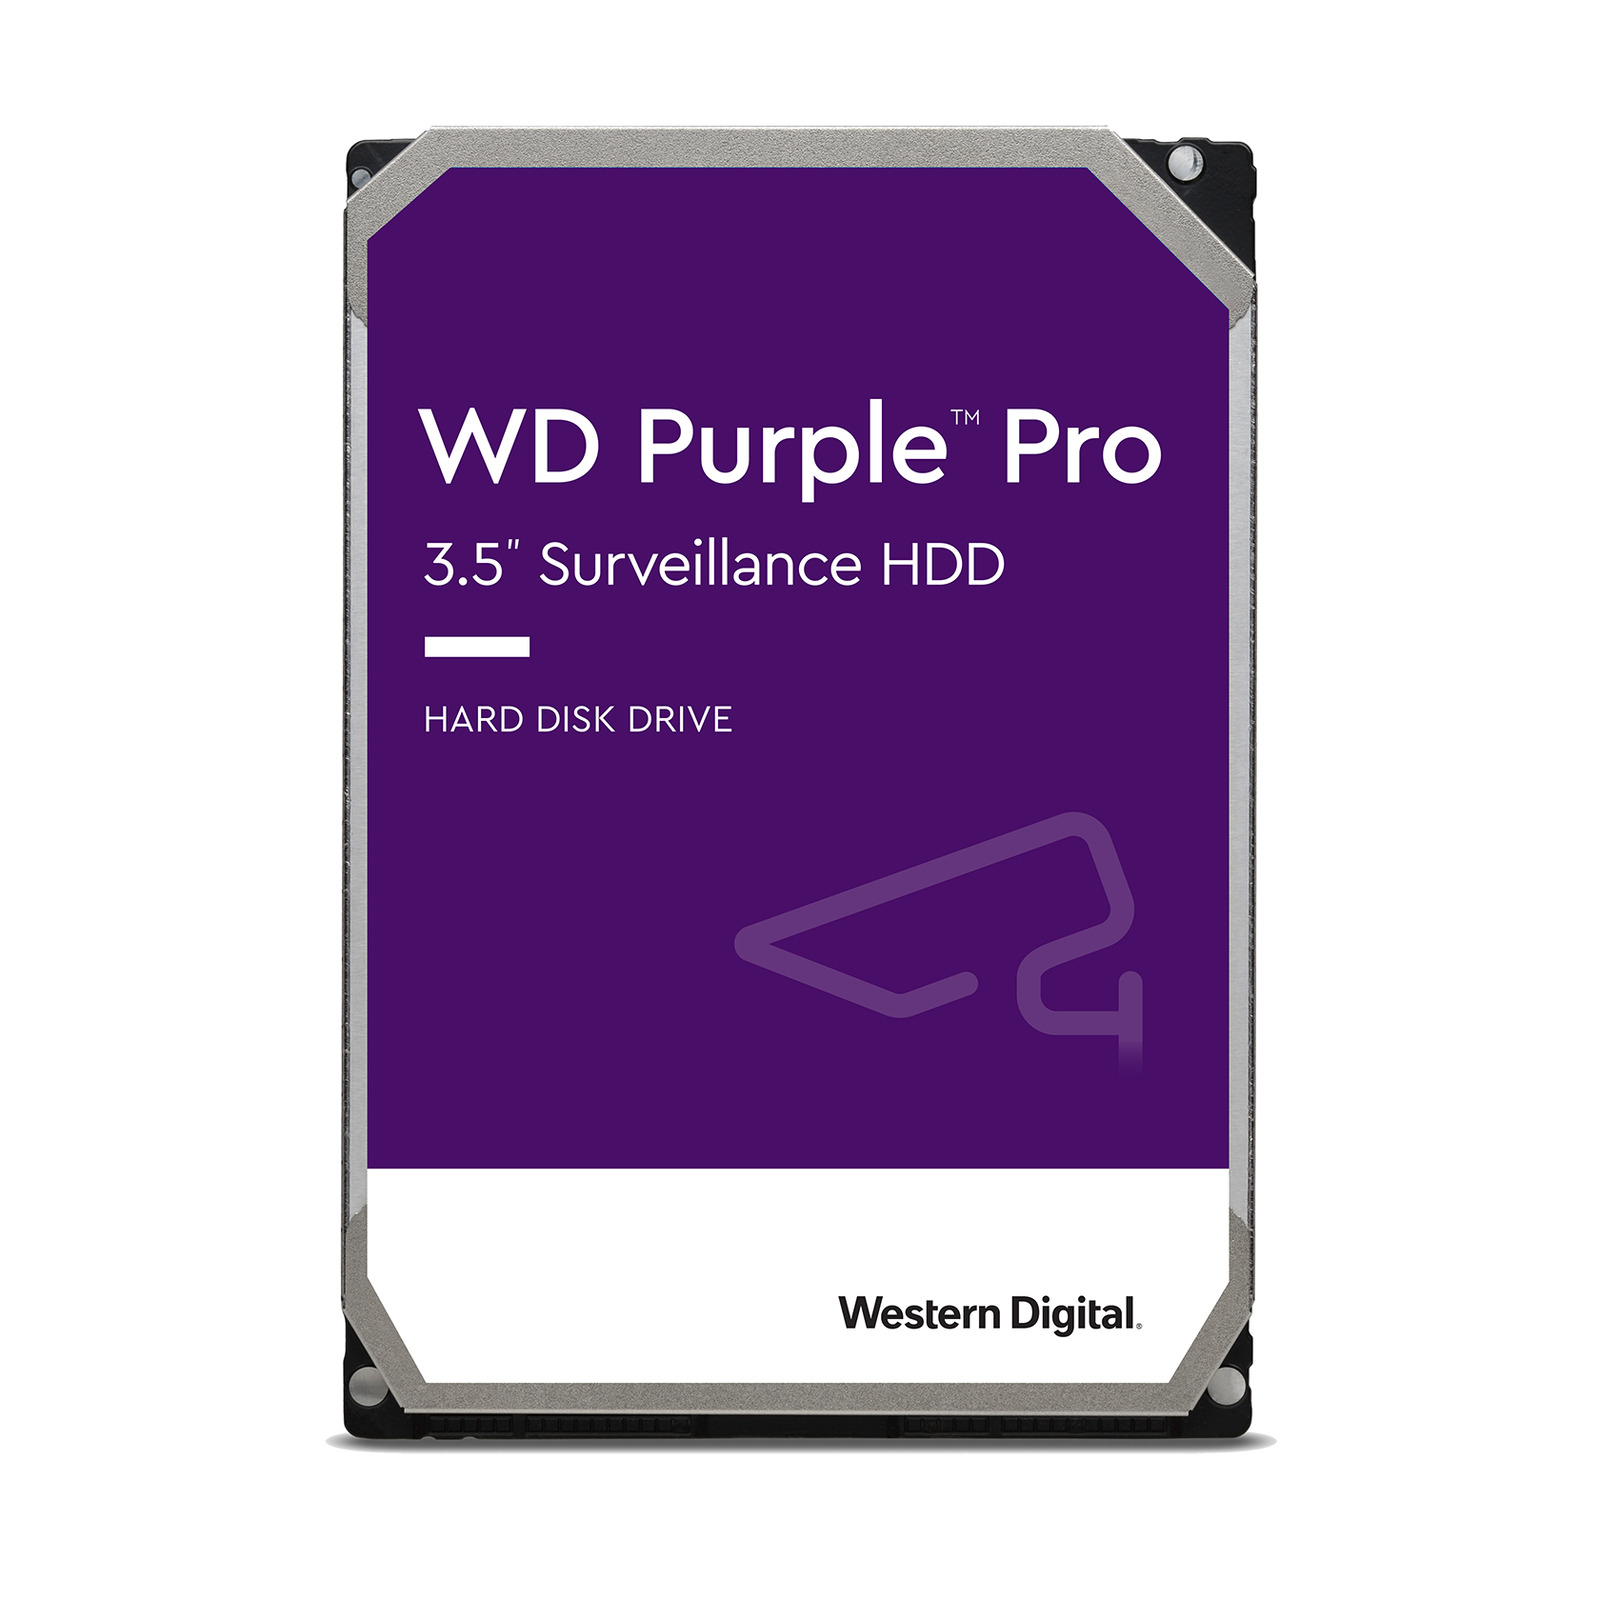 Western Digital 8TB WD Purple Pro Smart Video Internal Hard Drive - WD8001PURP